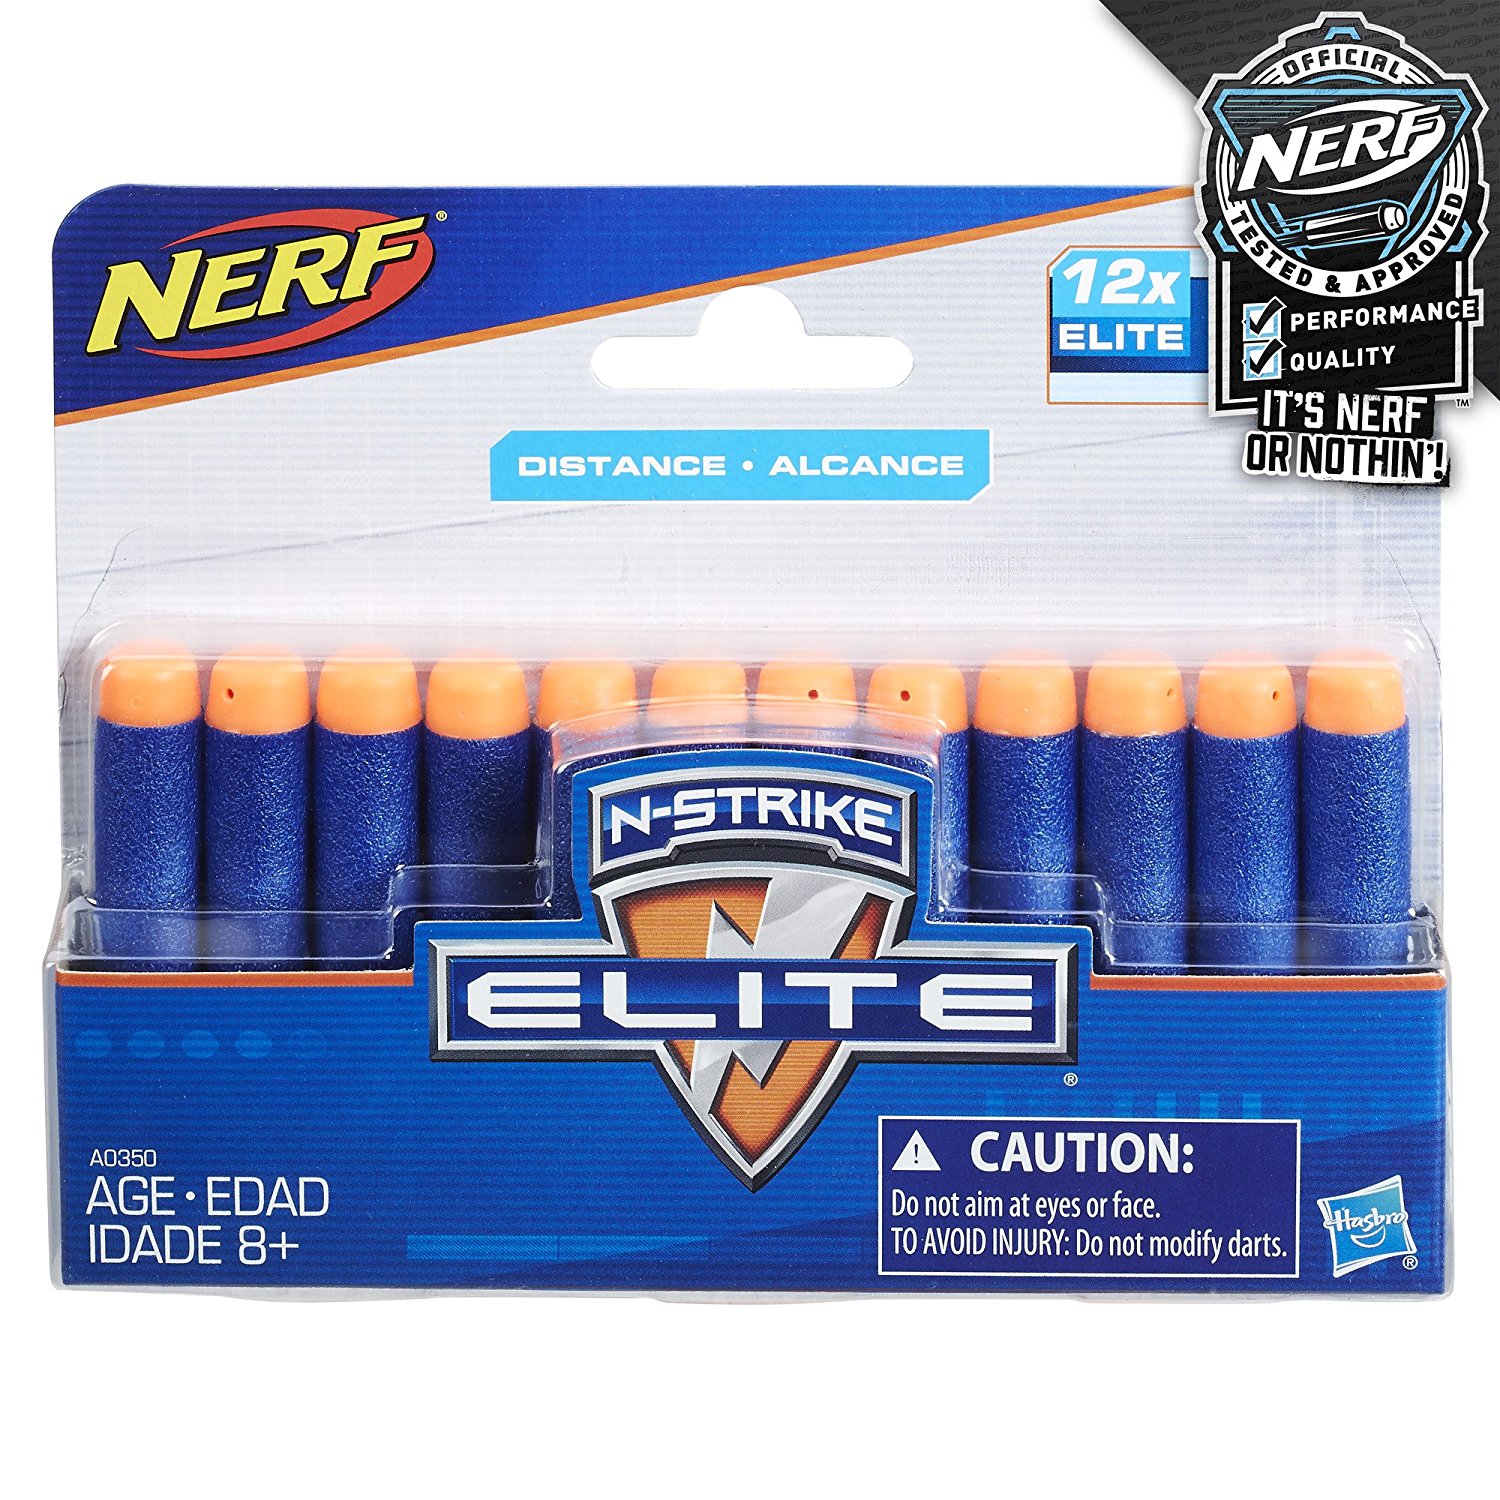 Nerf N-Strike Elite Series 12 Dart Refill Pack Only $3.49!